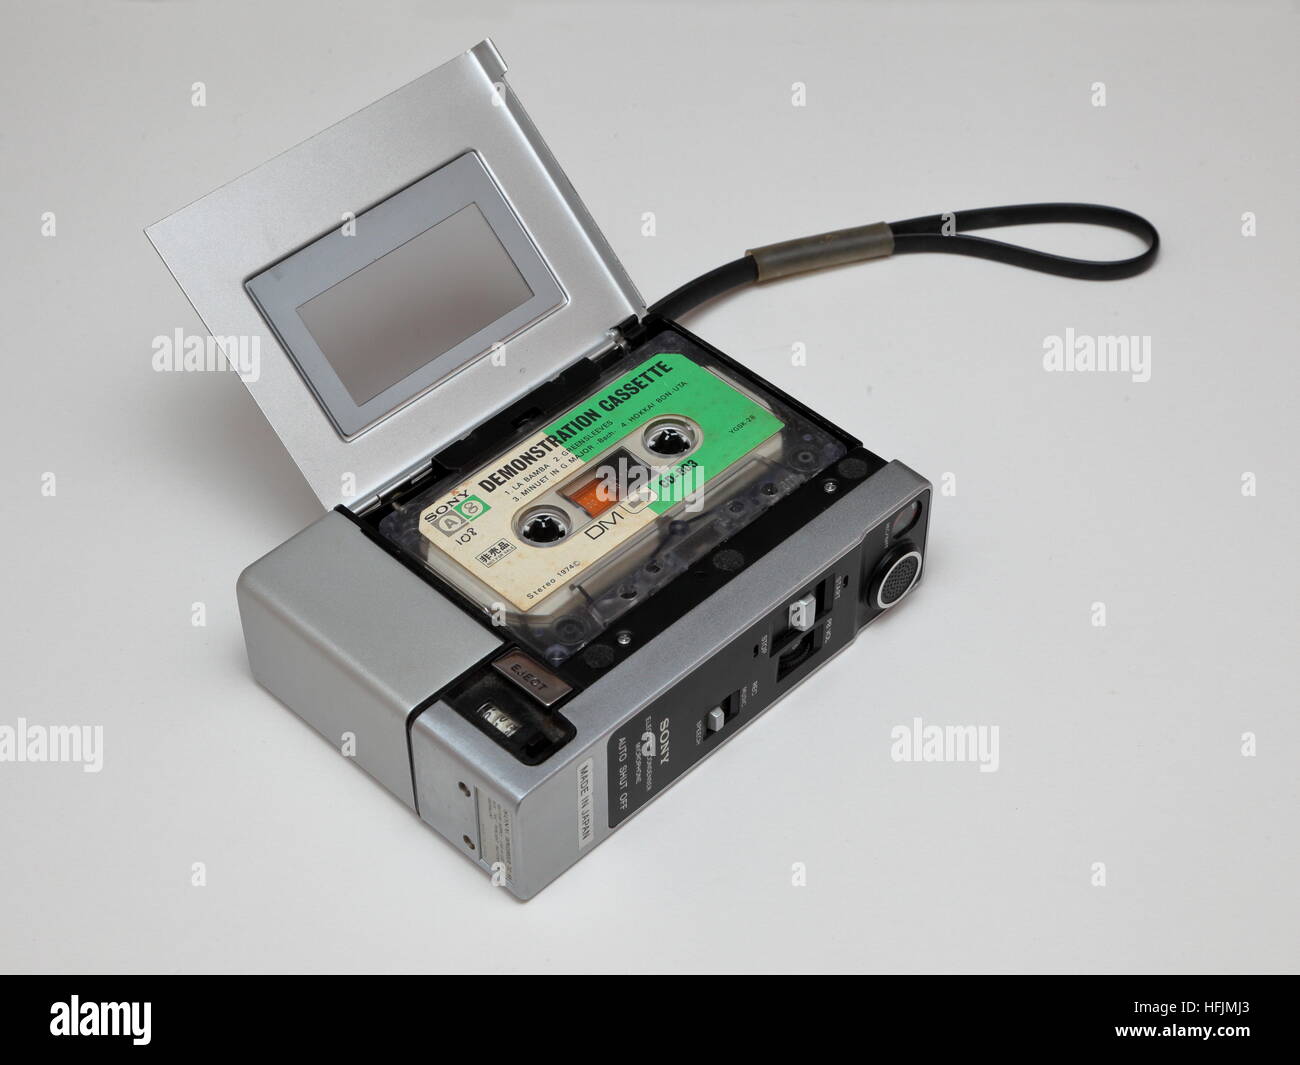 Mini Cassette with 9 Demos + Mini Tape Player/Recorder